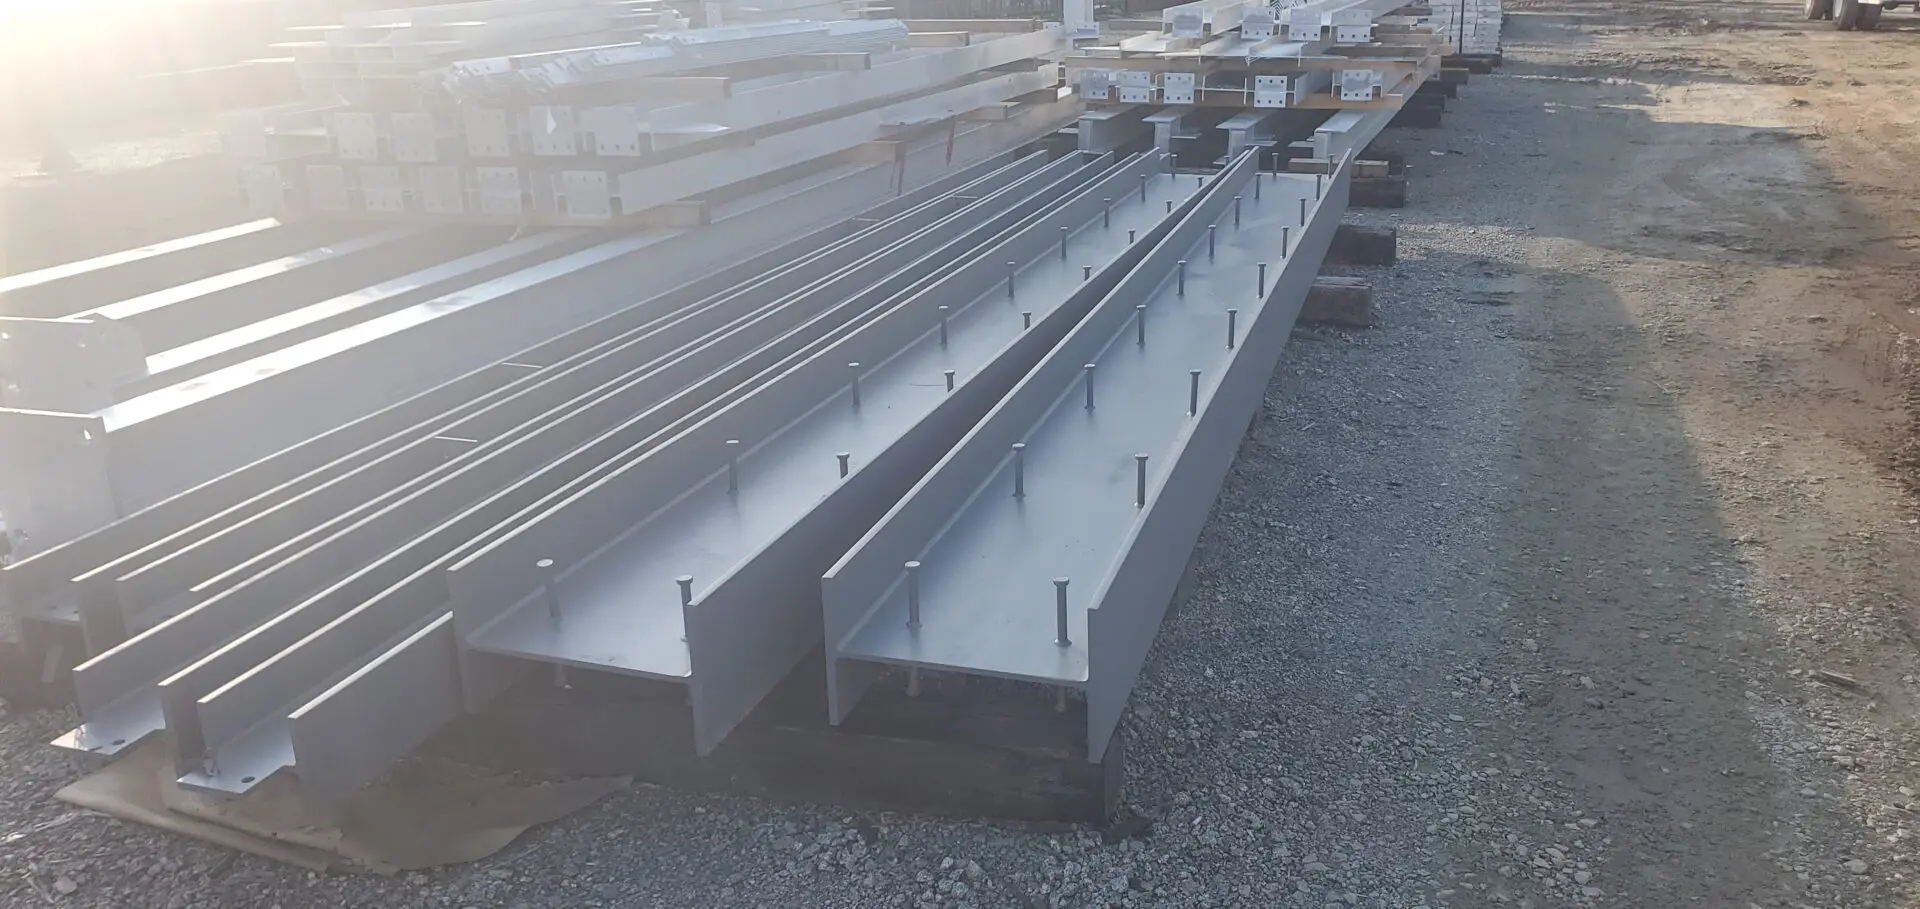 High-quality steel beams